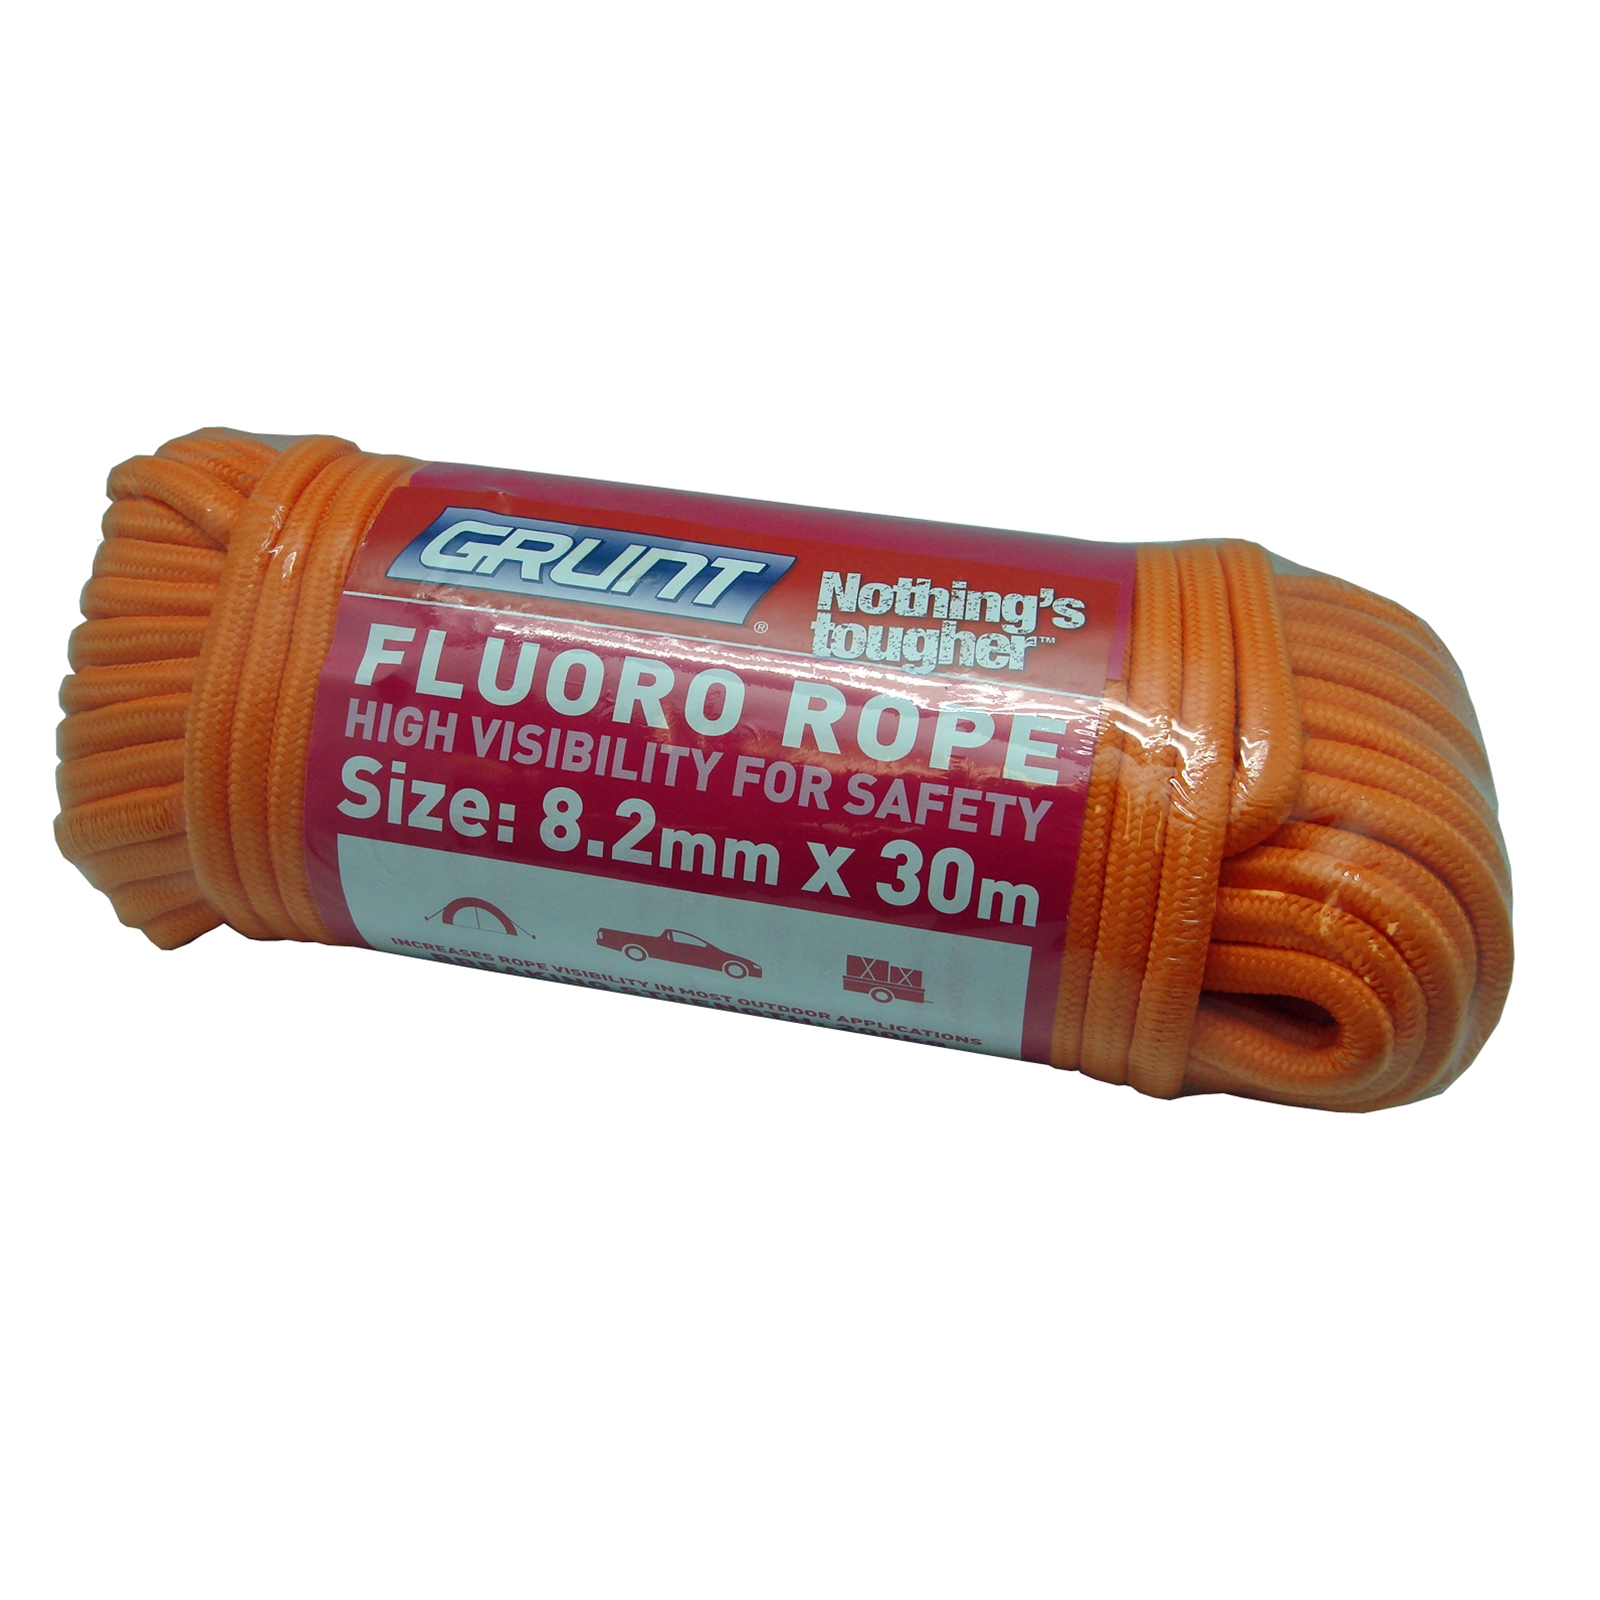 Grunt 8.2mm x 30m High Visibility Orange Fluro Rope